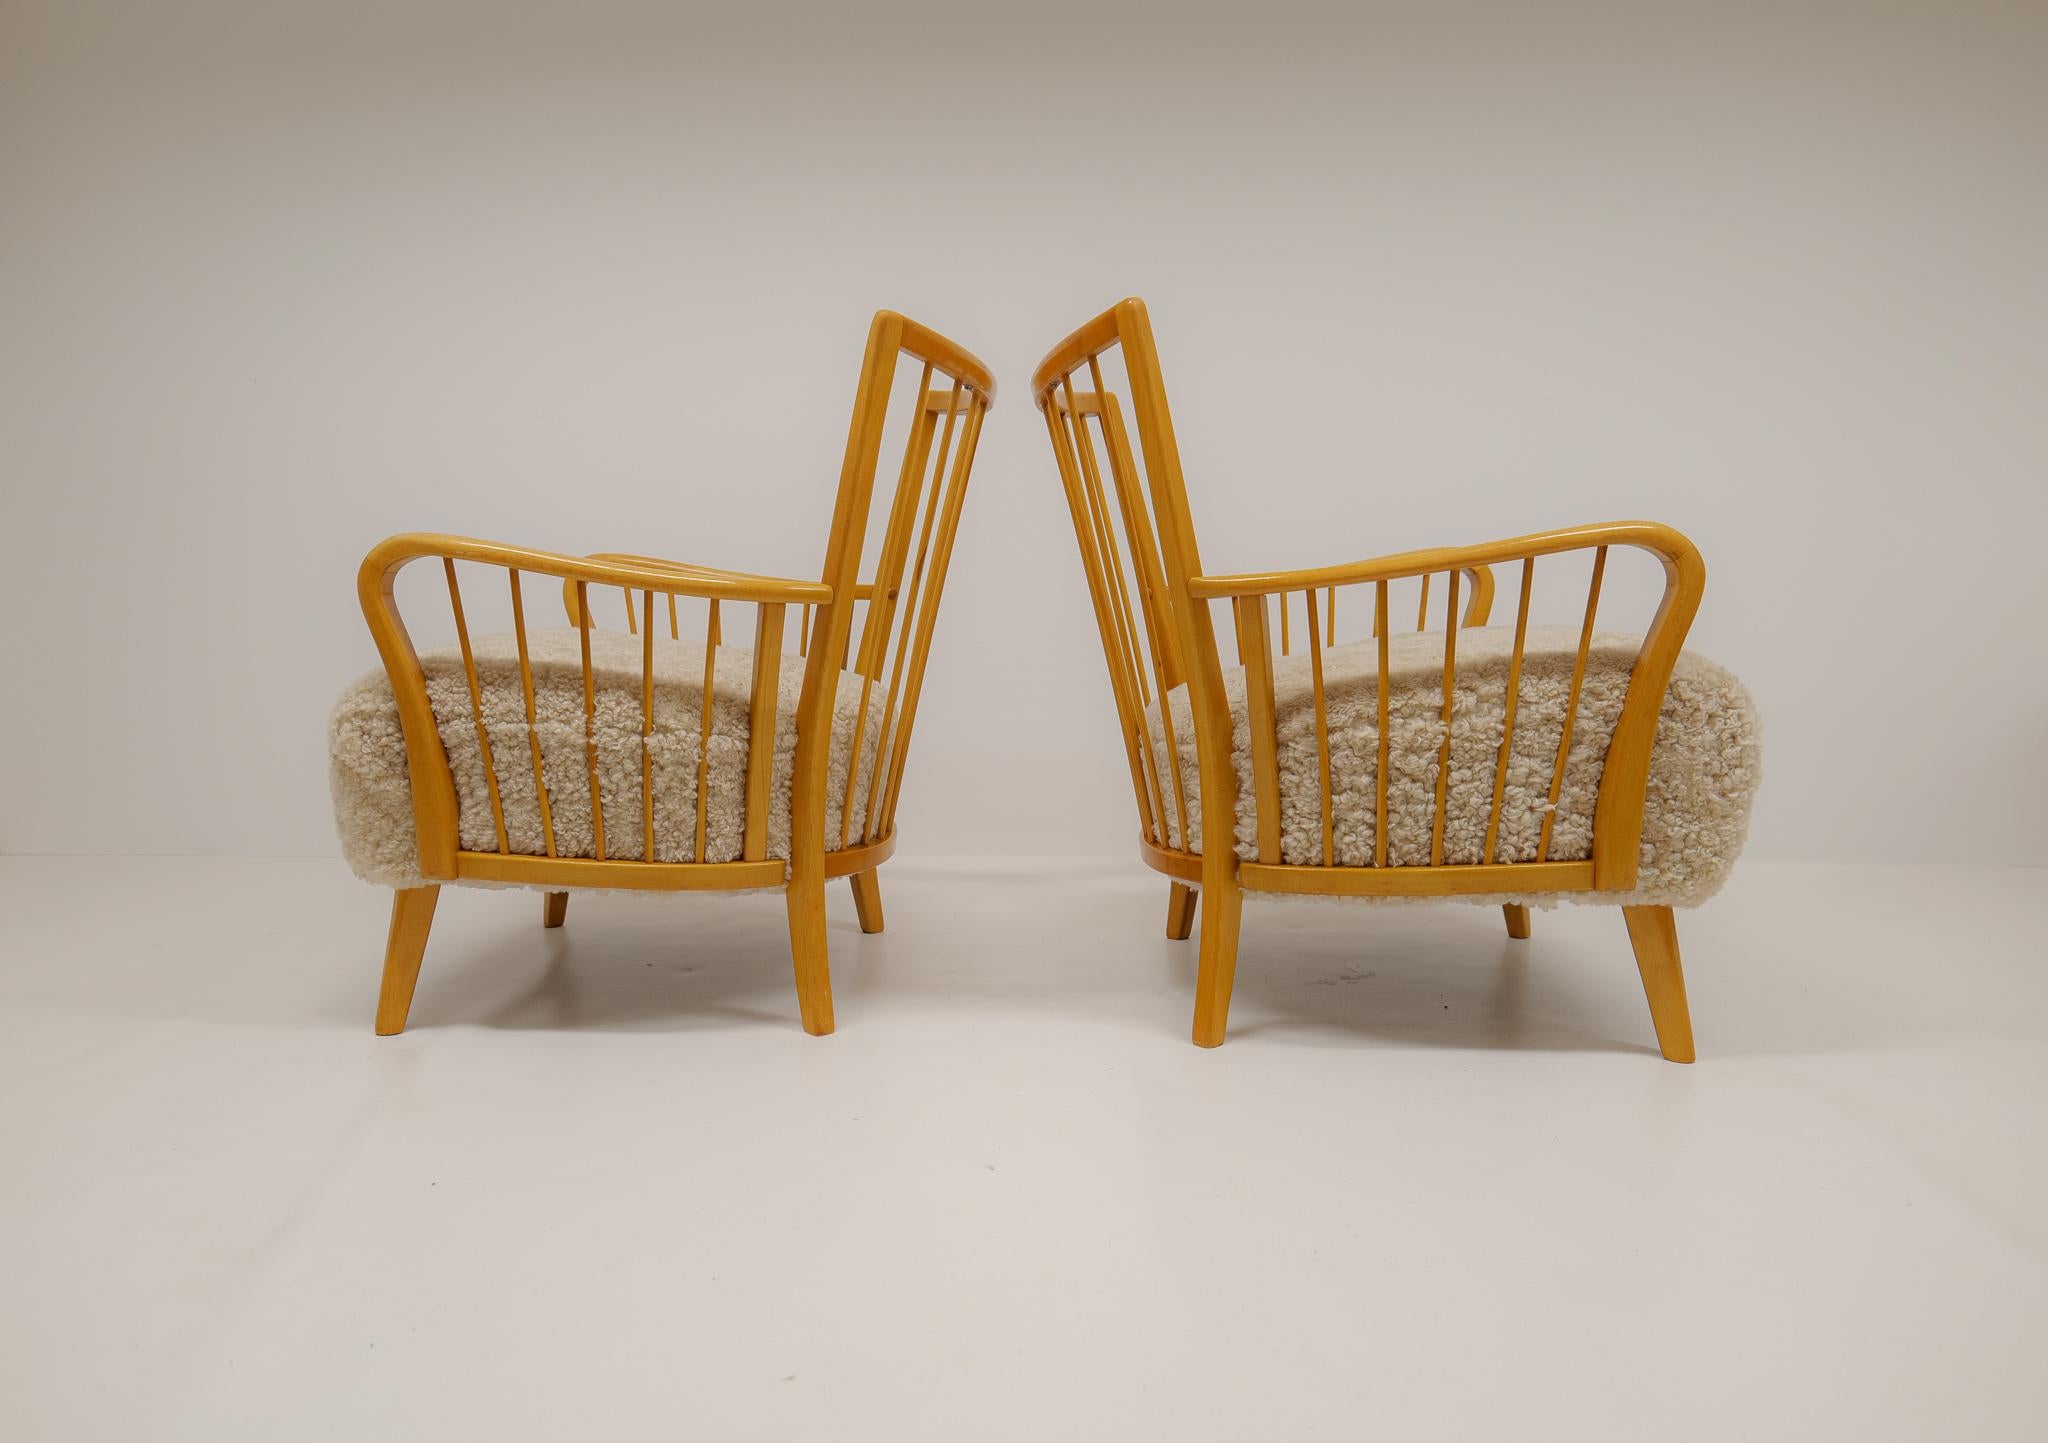 Art Deco Swedish Grace Lounge Chairs in Shearling / Sheepskin 1940s Sweden For Sale 6